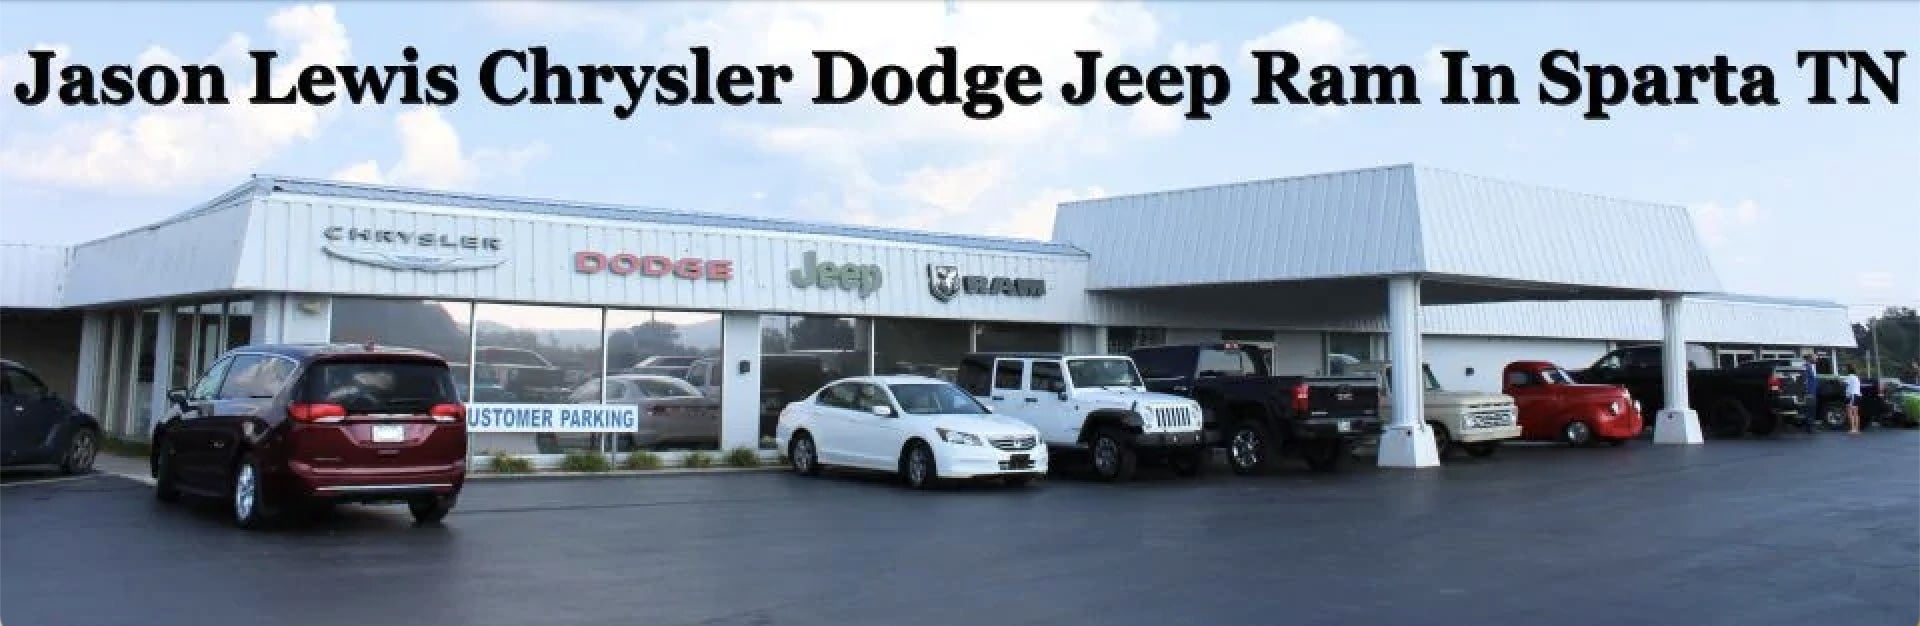 Test Drive Chrysler Dodge Jeep Ram Near Crossville TN